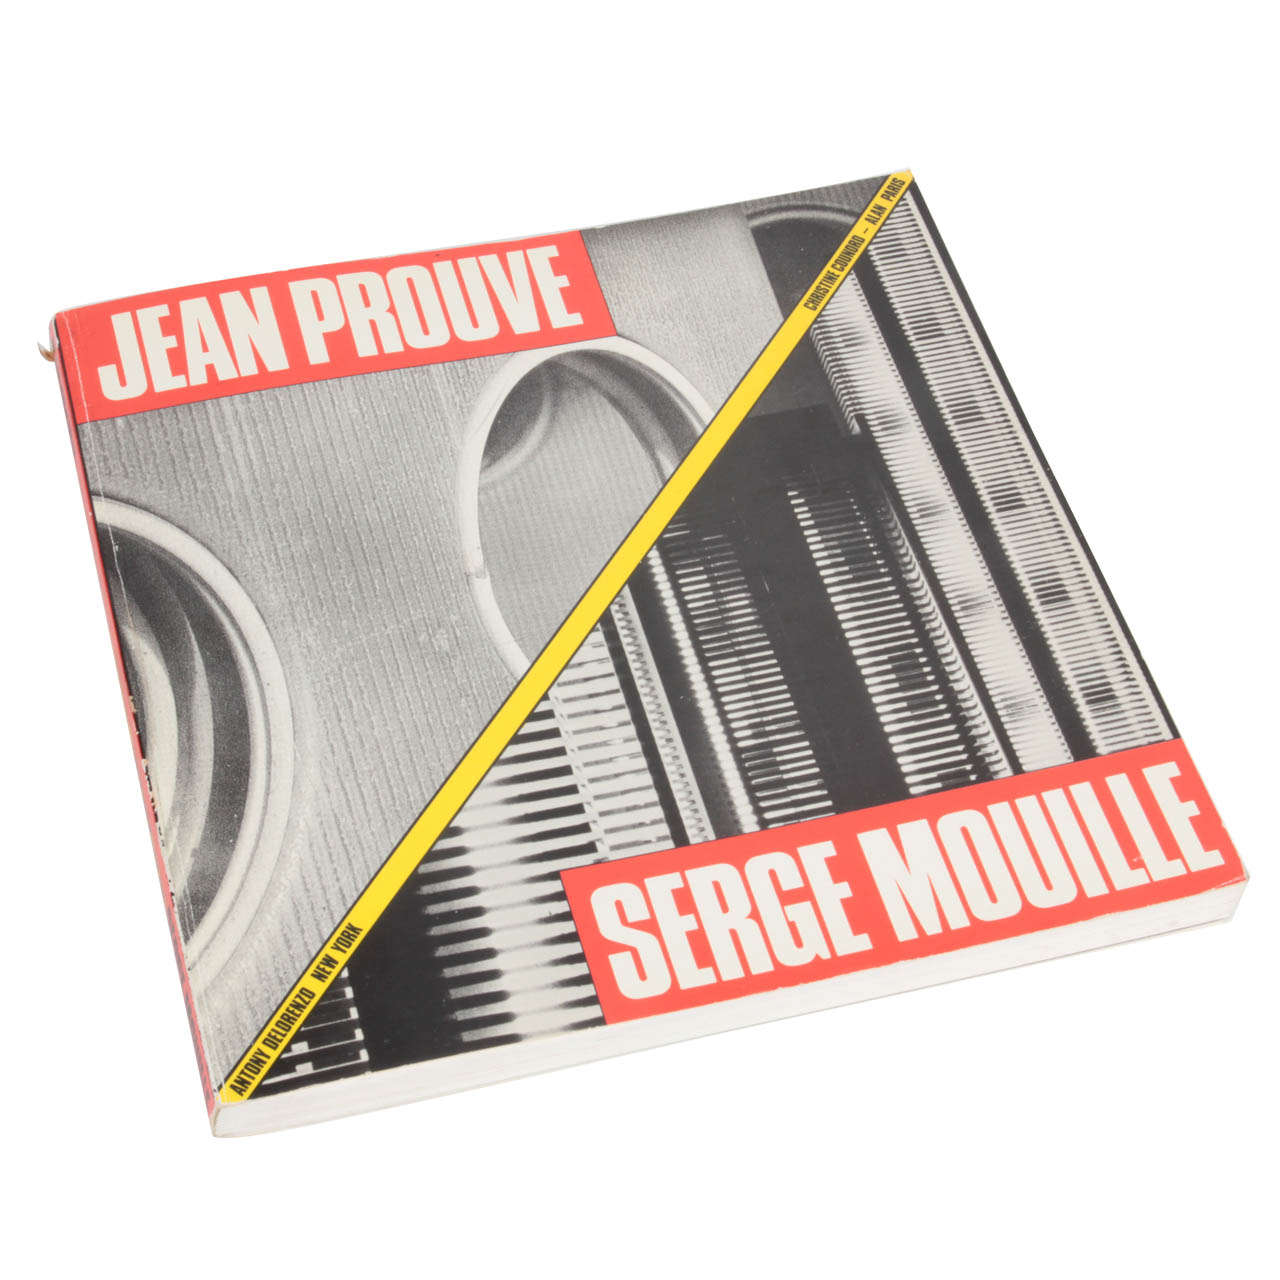 Jean Prouve/Serge Mouille Book For Sale